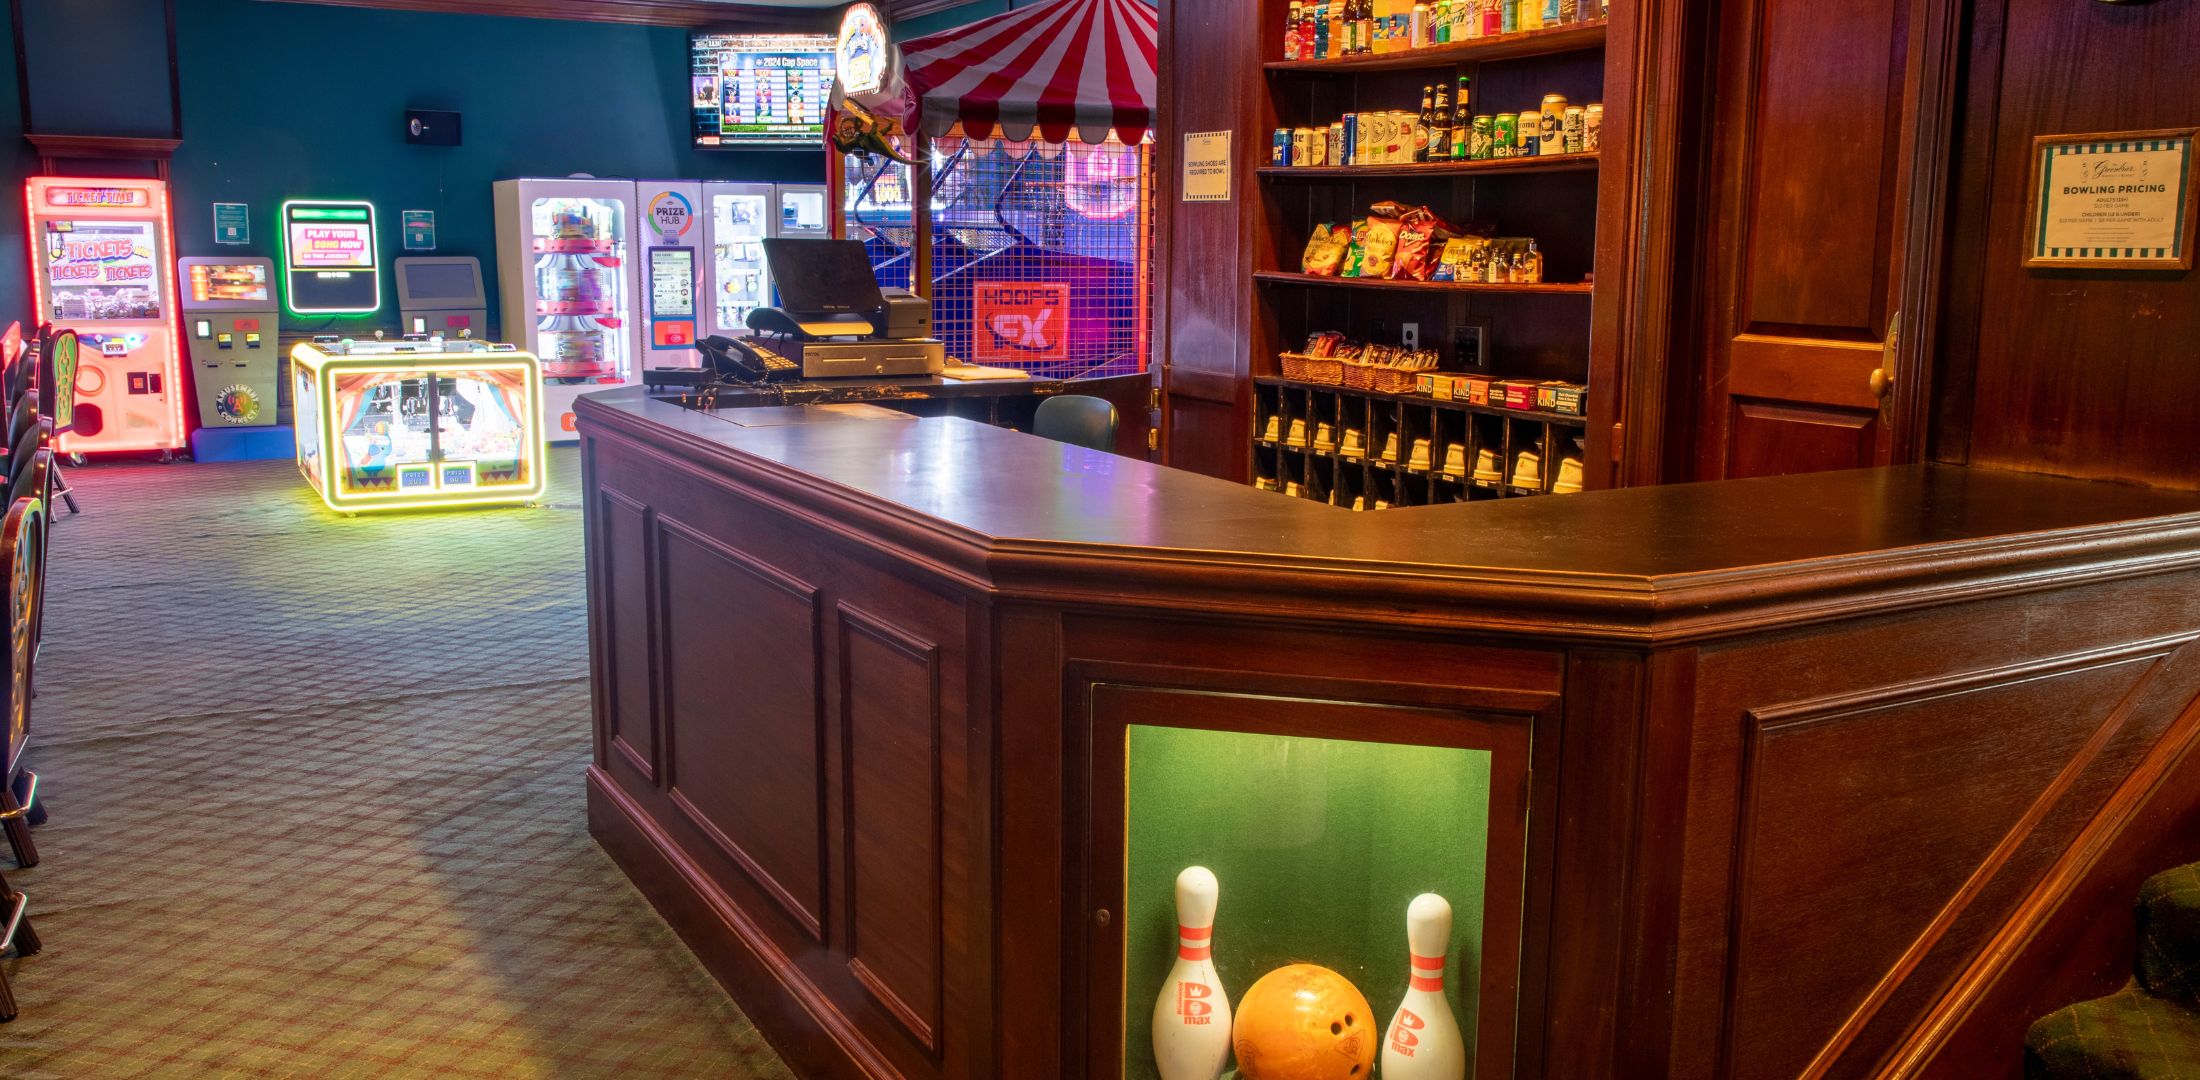 Snack Bar in Arcade